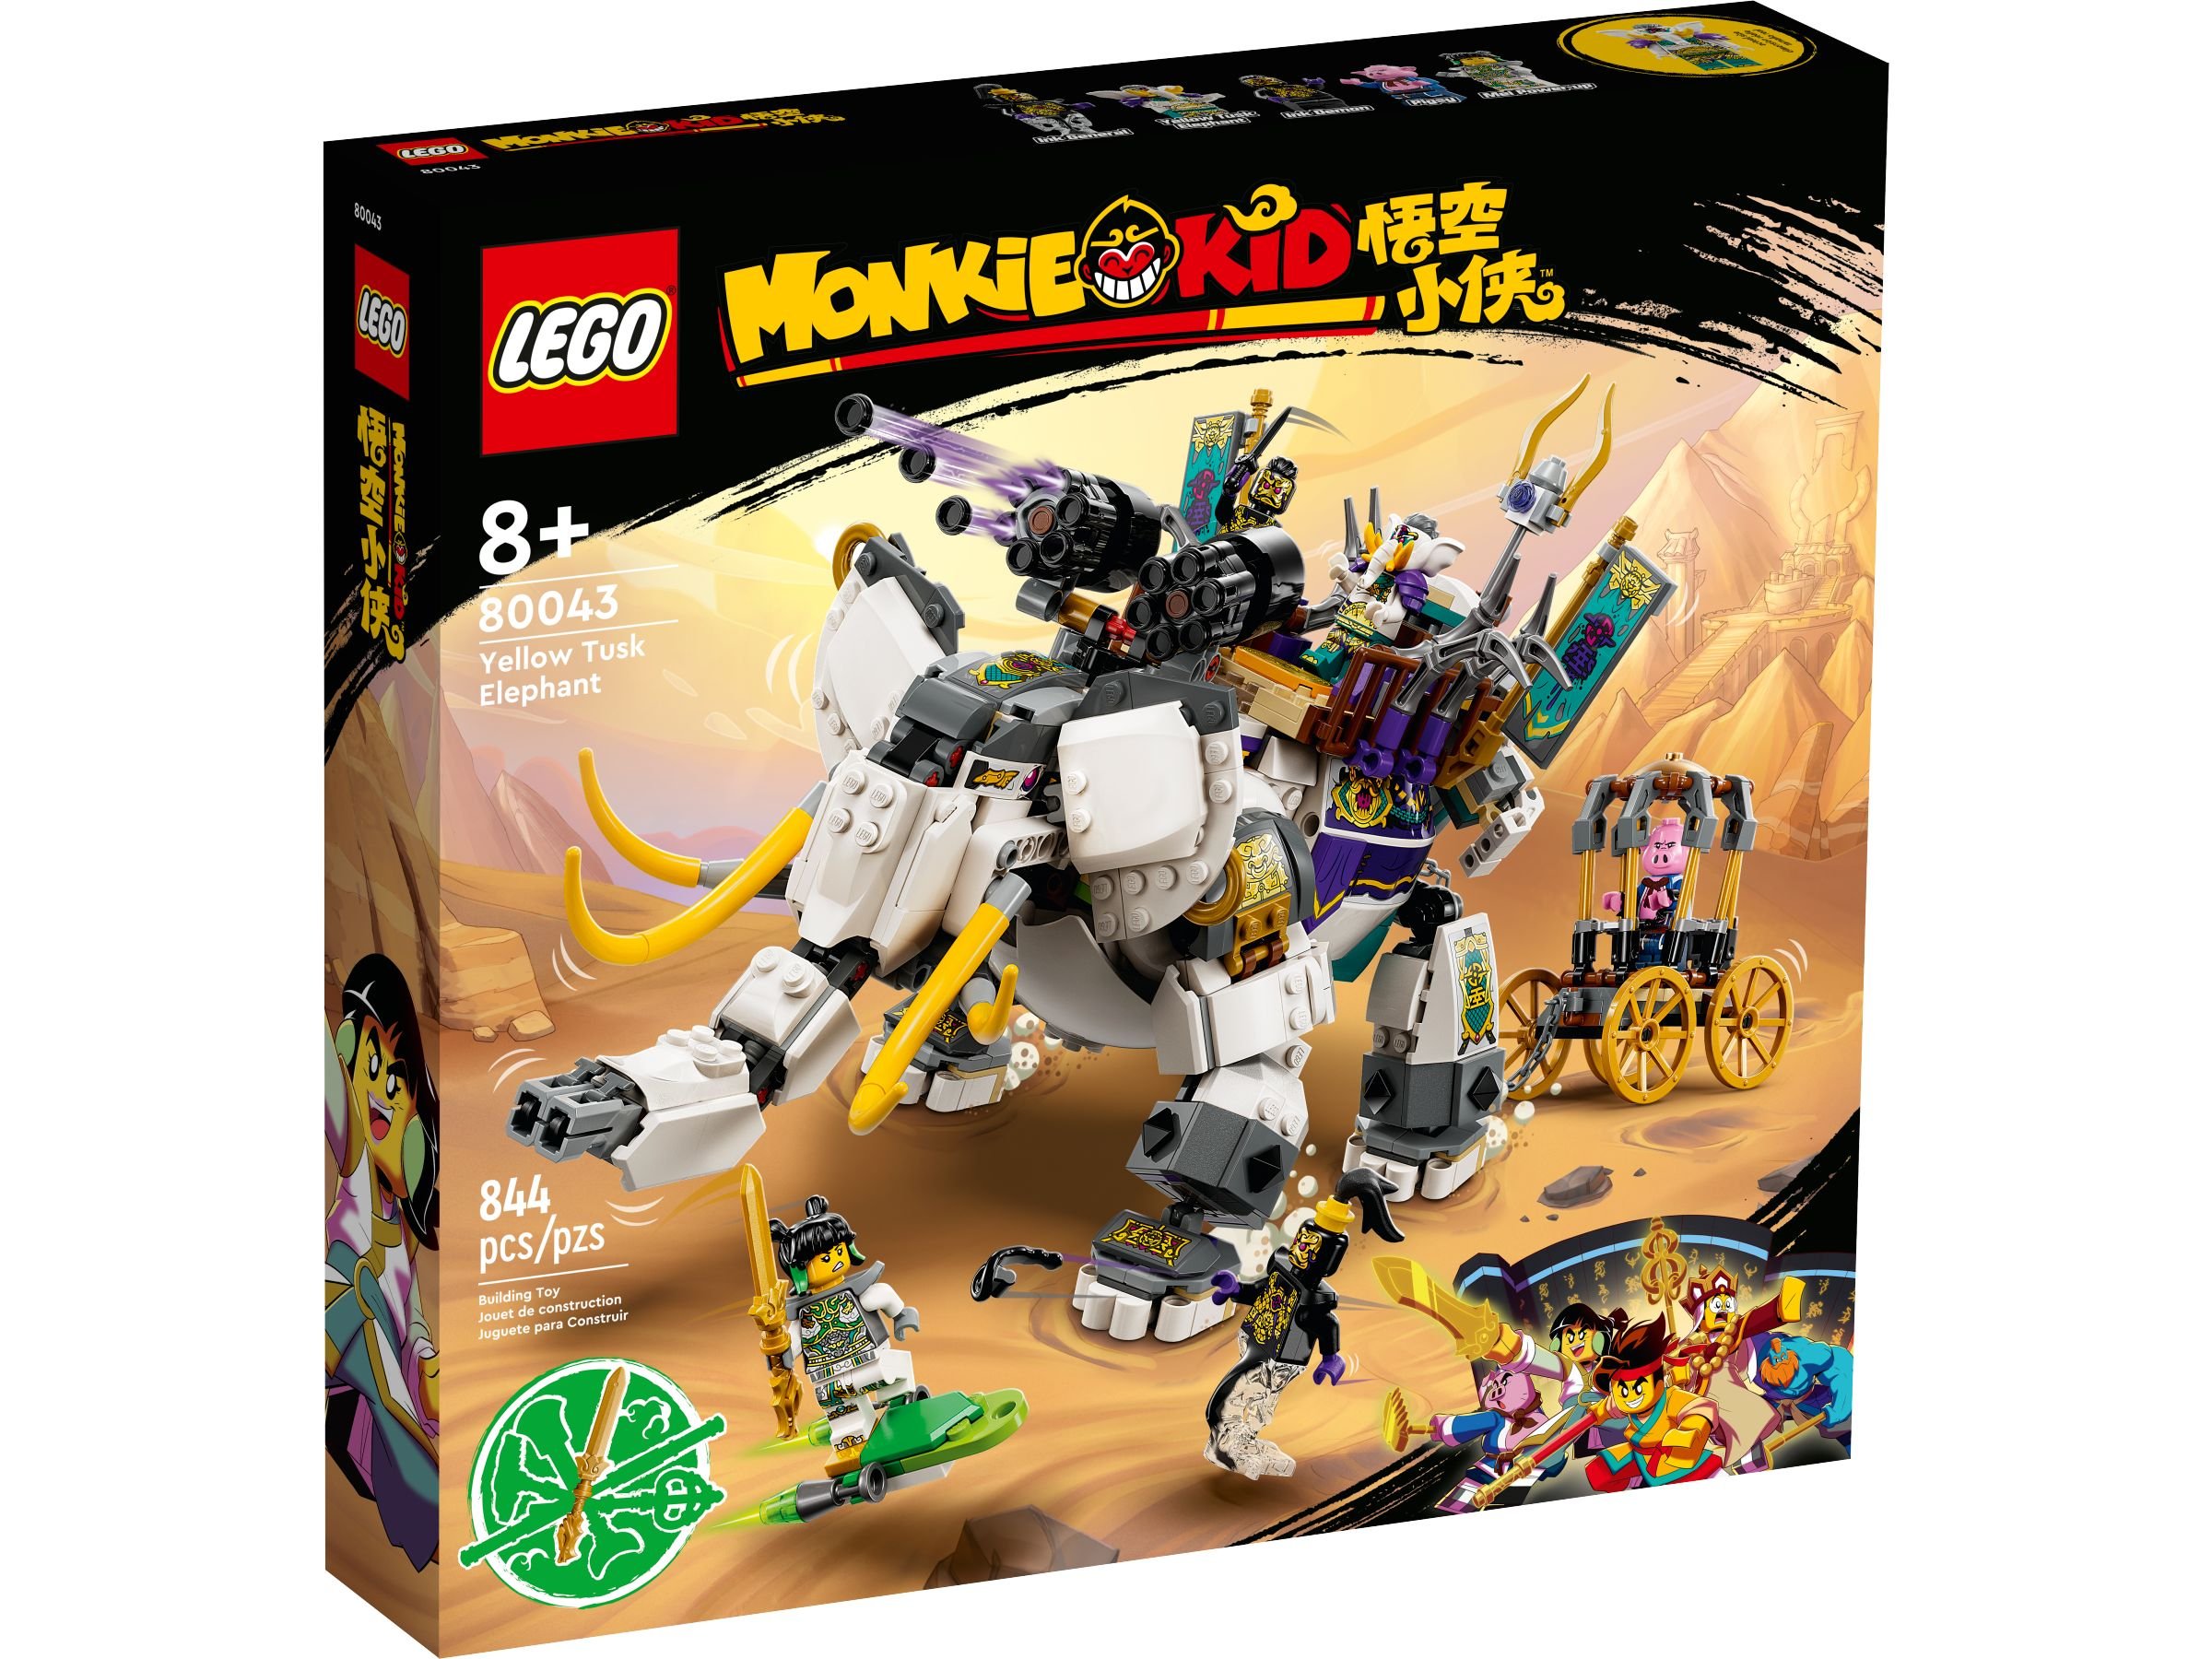 LEGO Monkie Kid 80043 Yellow Tusk Elephant LEGO_80043_alt1.jpg